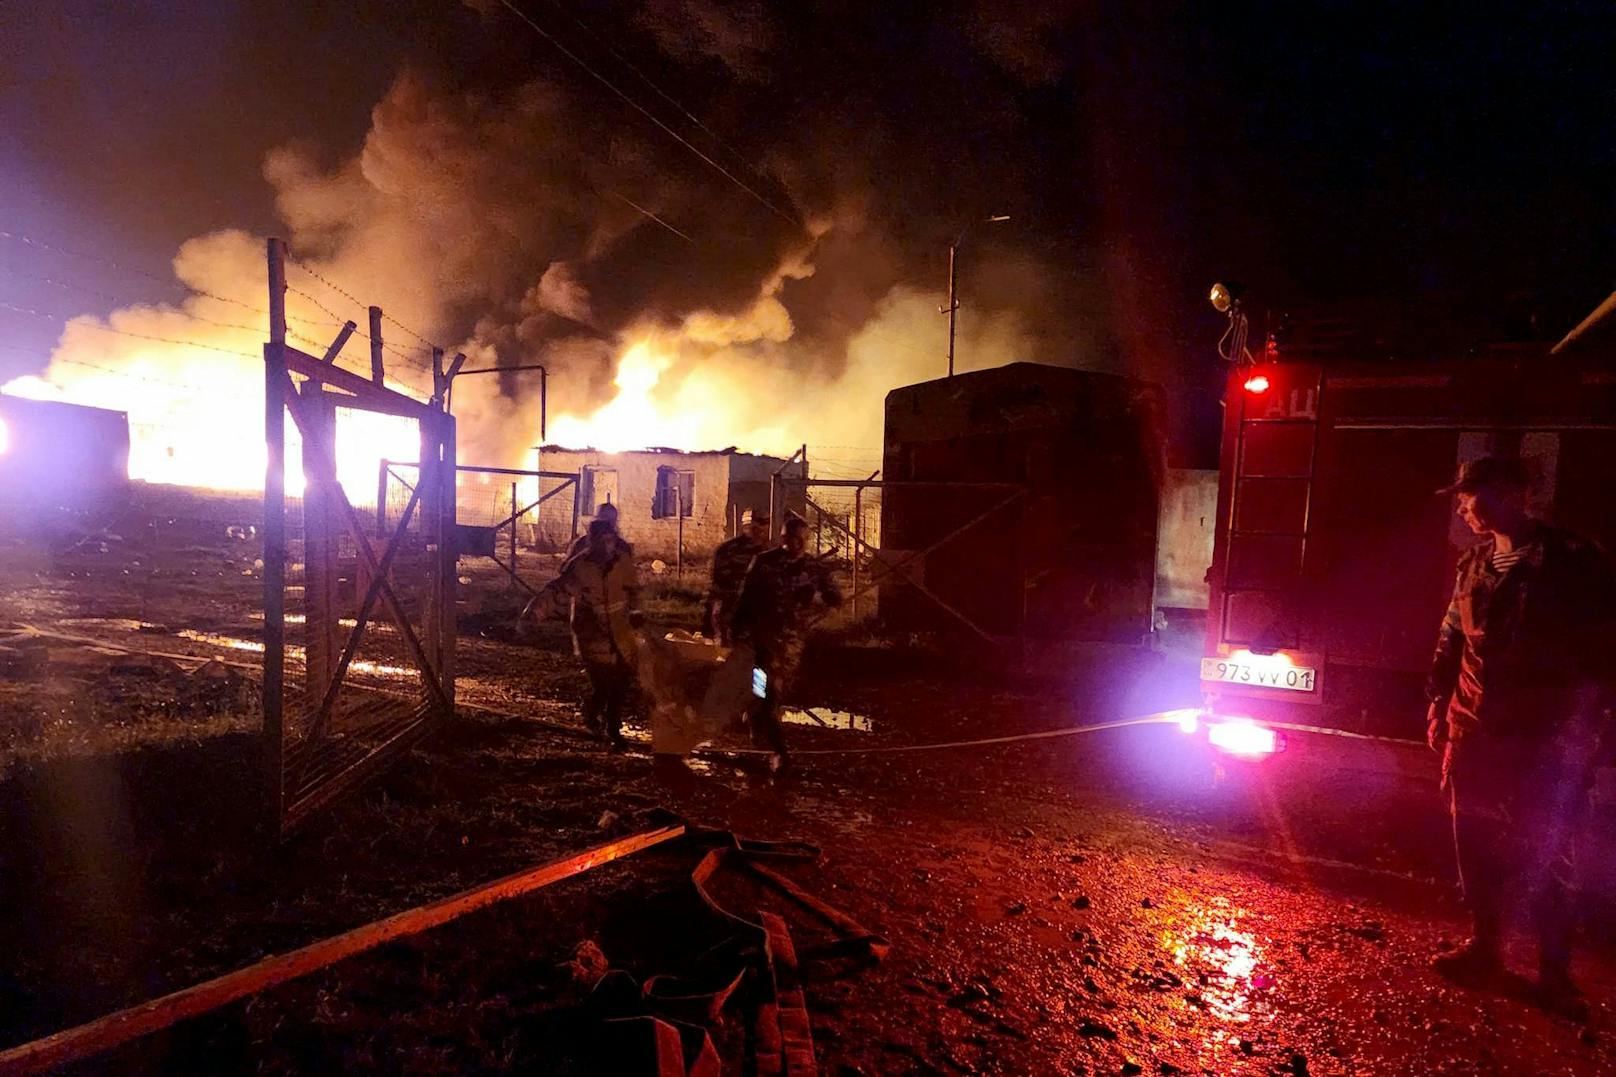 Treibstofflager explodiert – Hunderte Opfer befürchtet